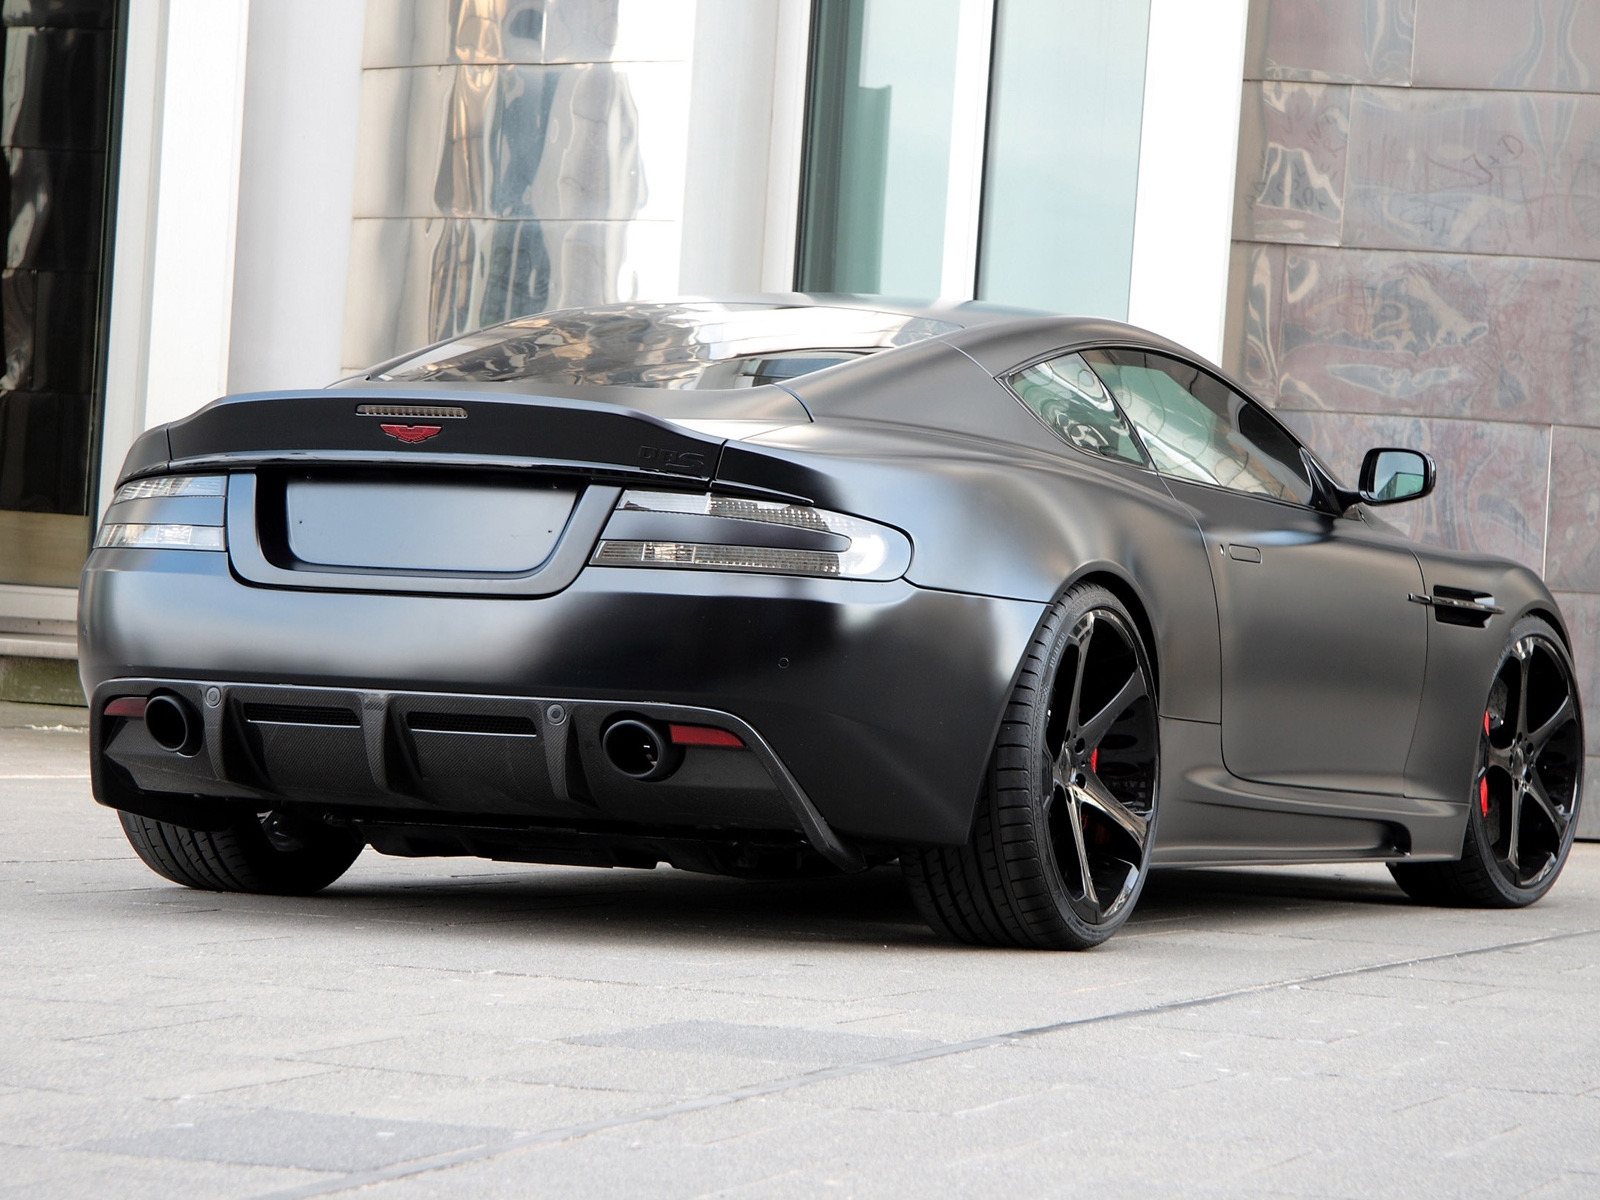 Aston Martin DBS Superior Black Edition Rear for 1600 x 1200 resolution